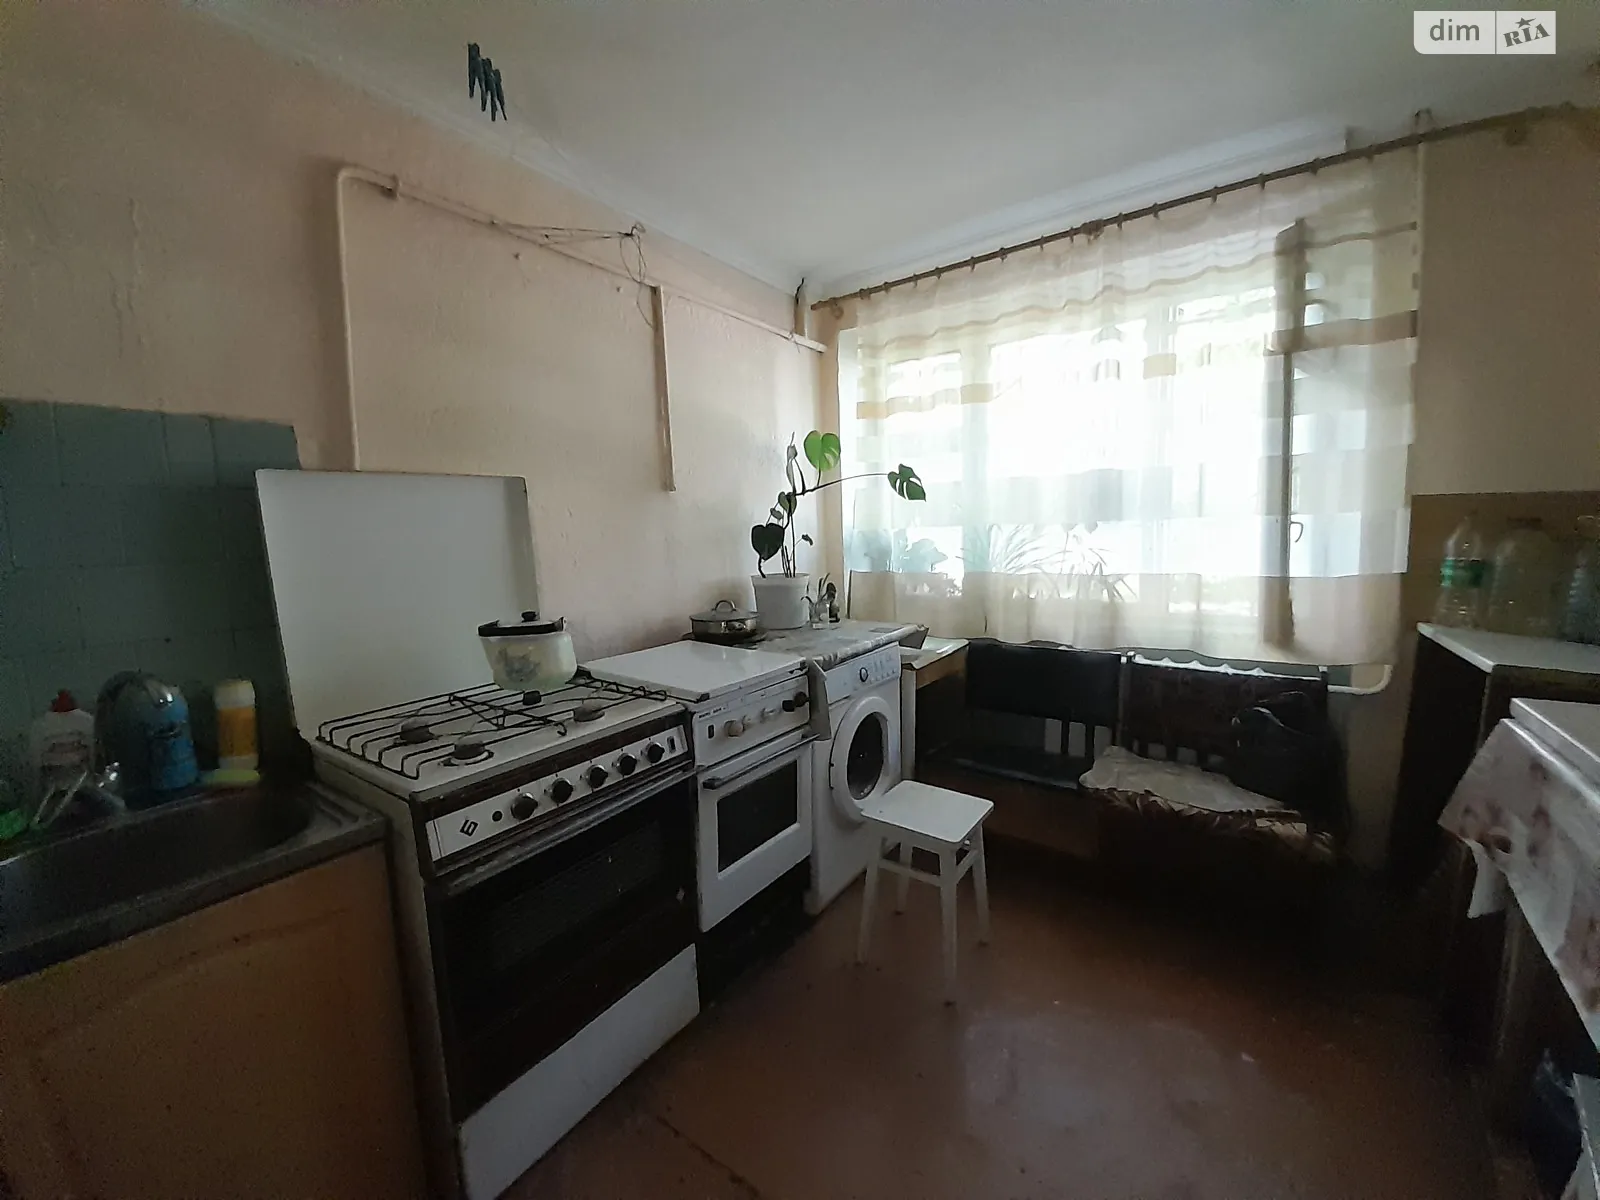 Продается комната 20 кв. м в Одессе, цена: 7000 $ - фото 1